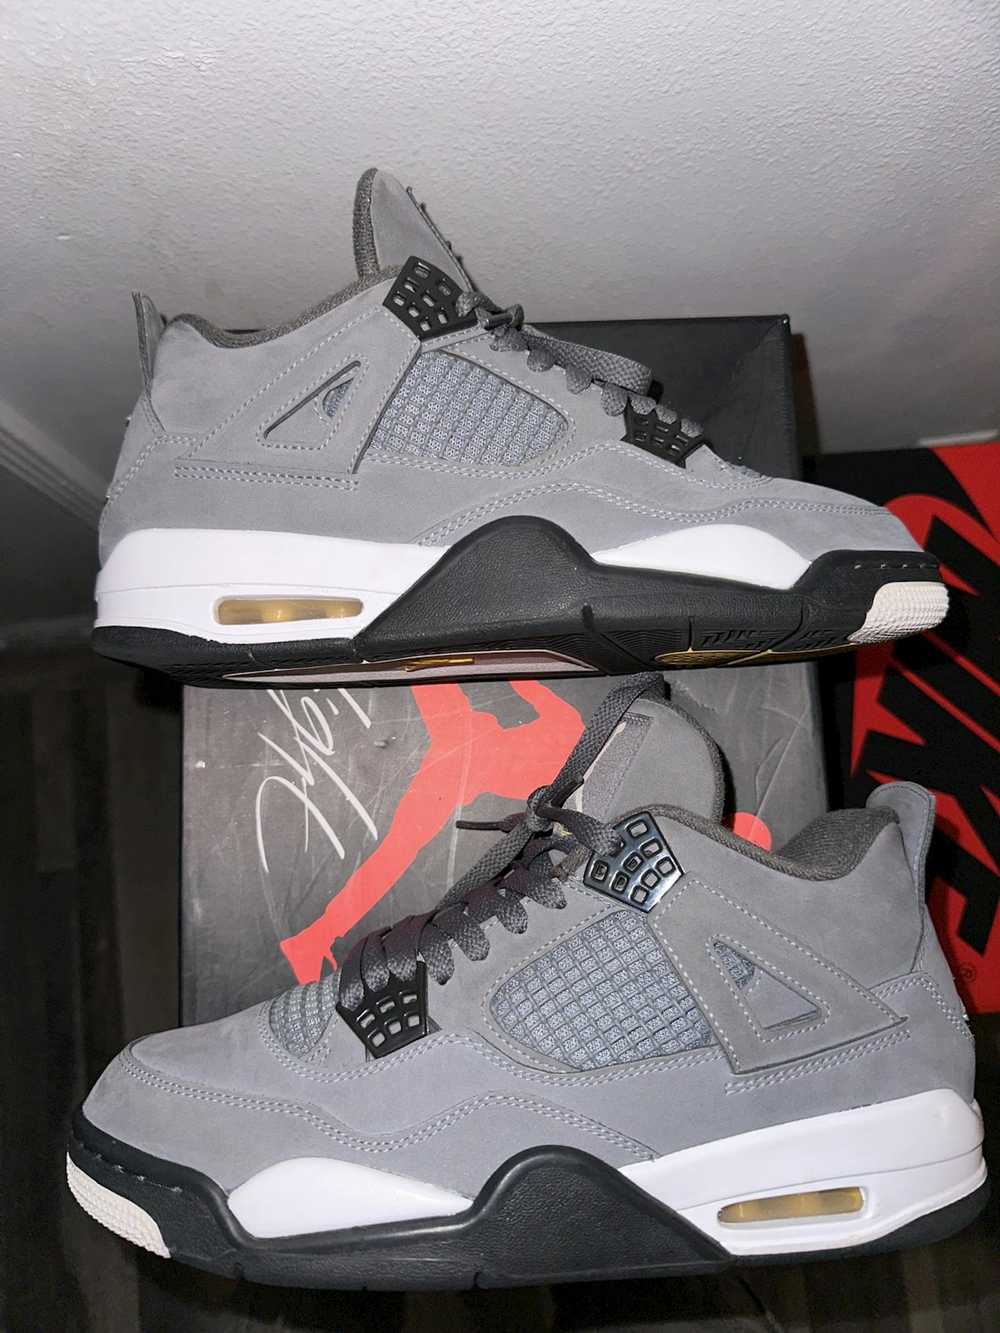 Jordan Brand × Nike Jordan 4 cool greys - image 9